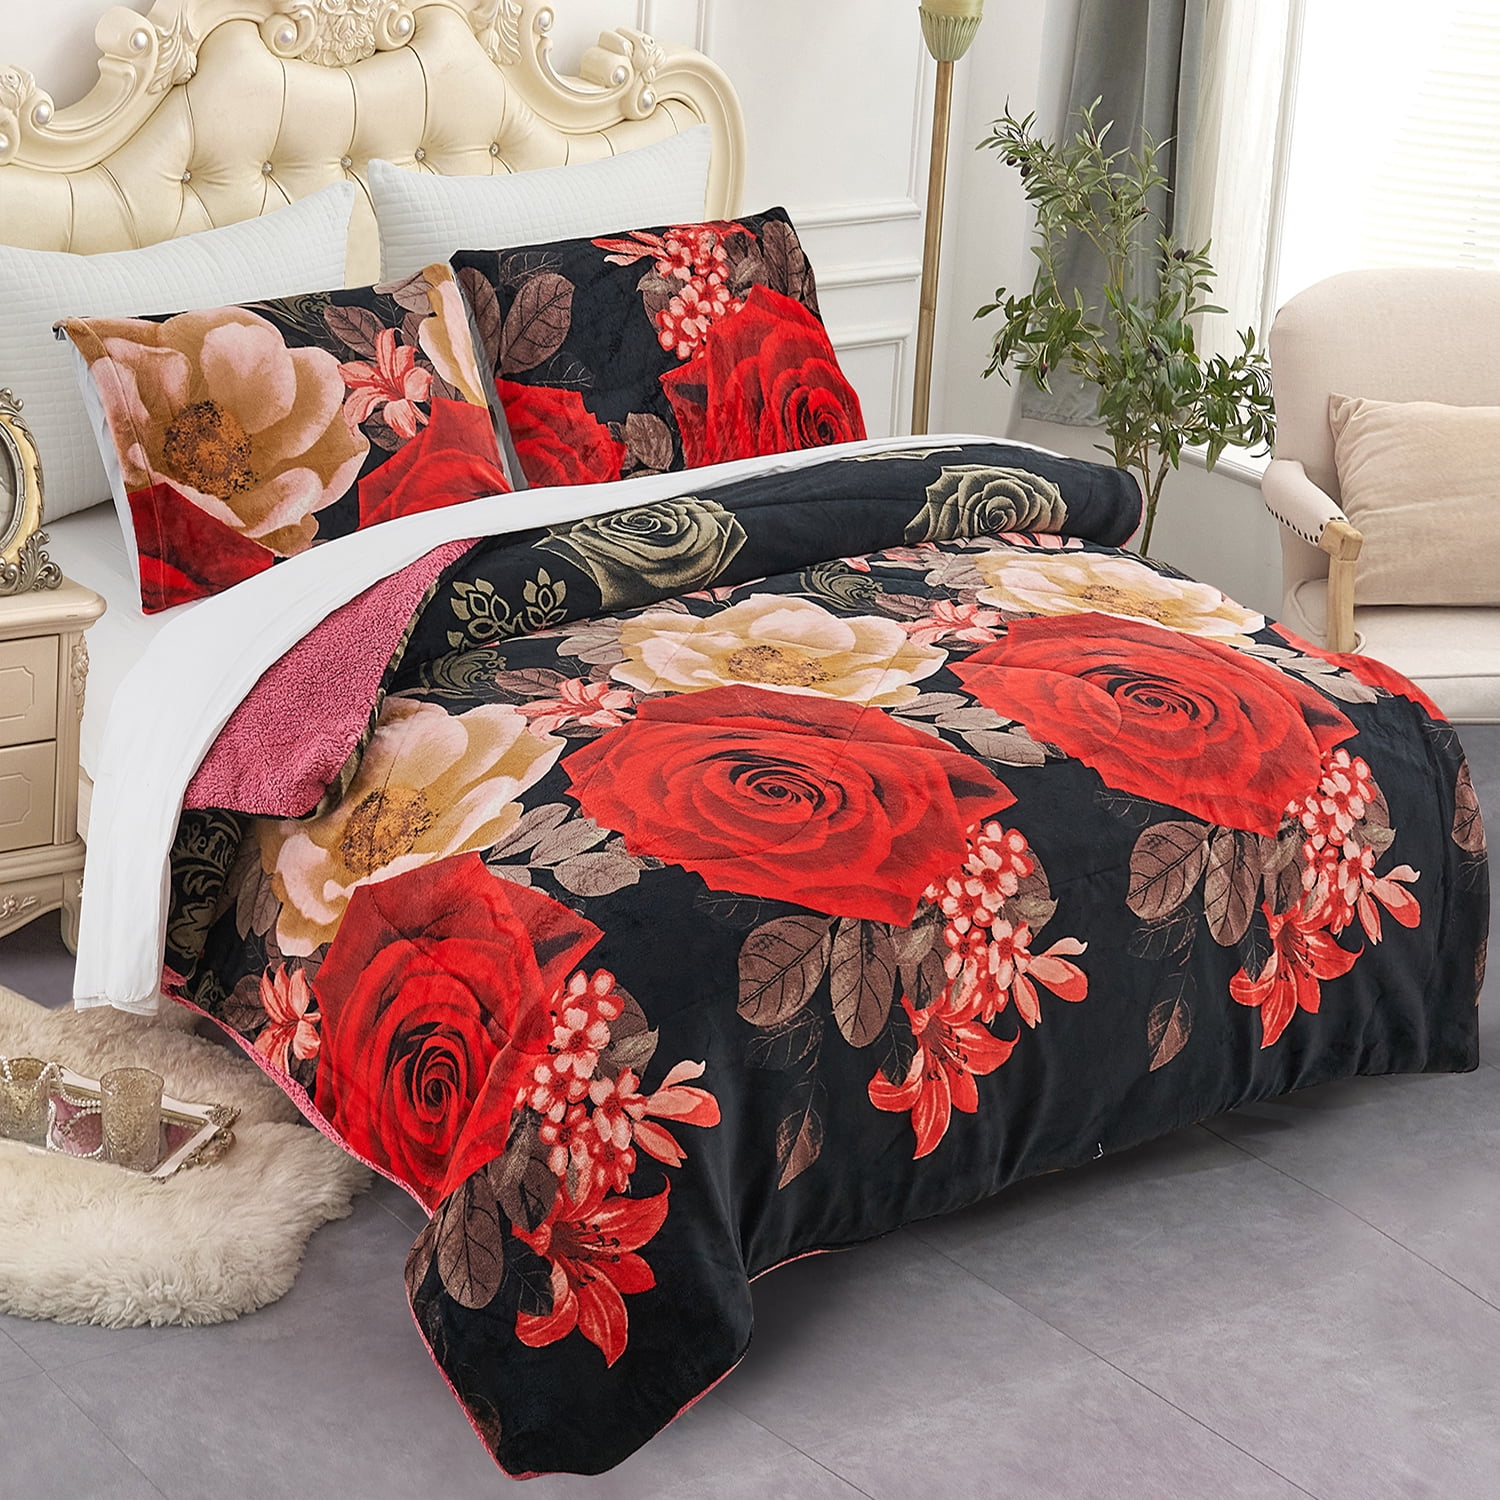 JML Plush Sherpa Bed Blanket, Fluffy & Soft, Reversible, Thick